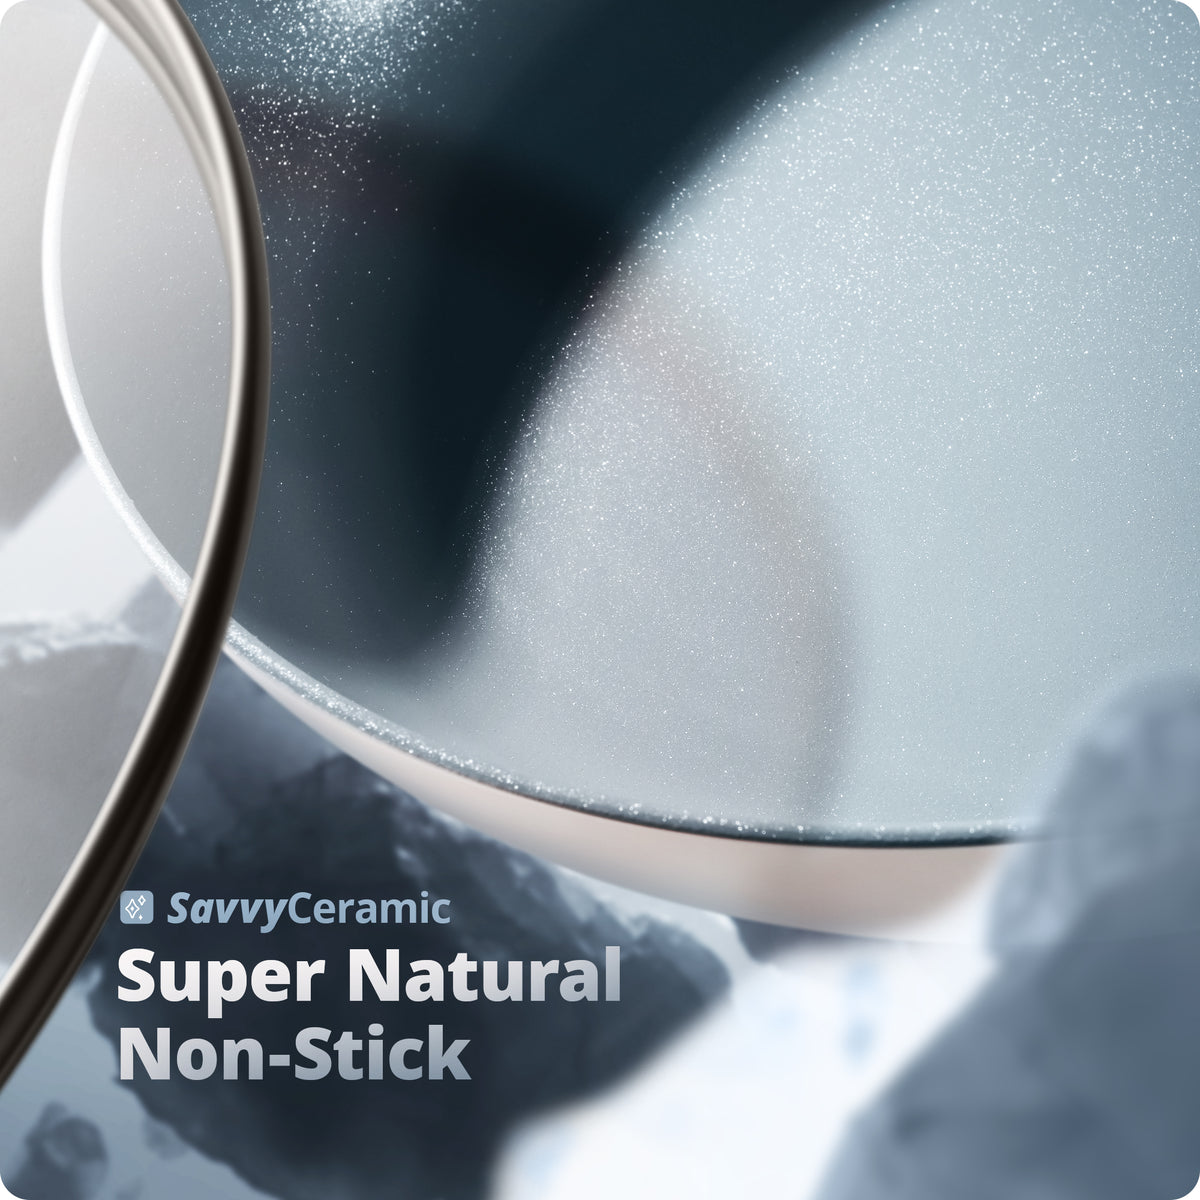 Super Natural Non-Stick: Naturally Derived Ceramic, Abnormally Slick, Easy Cleanup, Extraordinarily Built (Birch White)